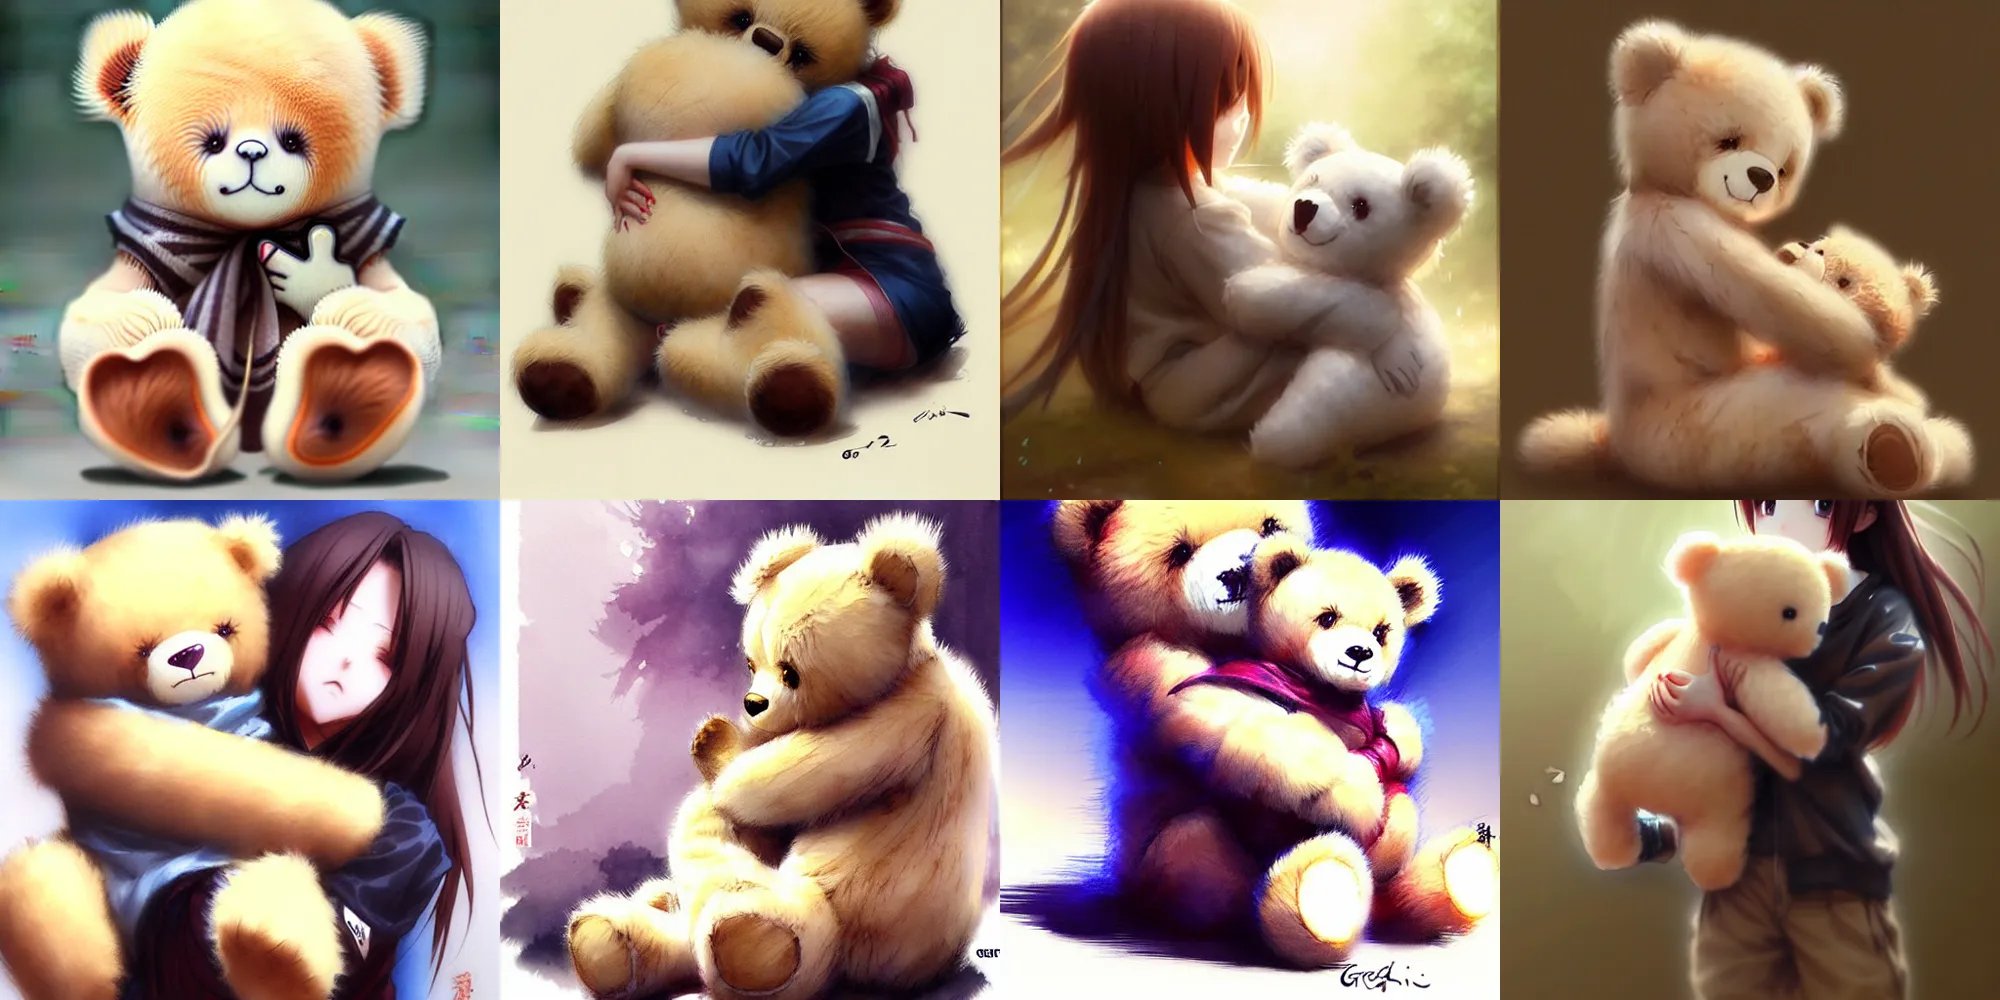 Prompt: cute anime young female hug teddy bear, shikishi, by greg rutkowski and